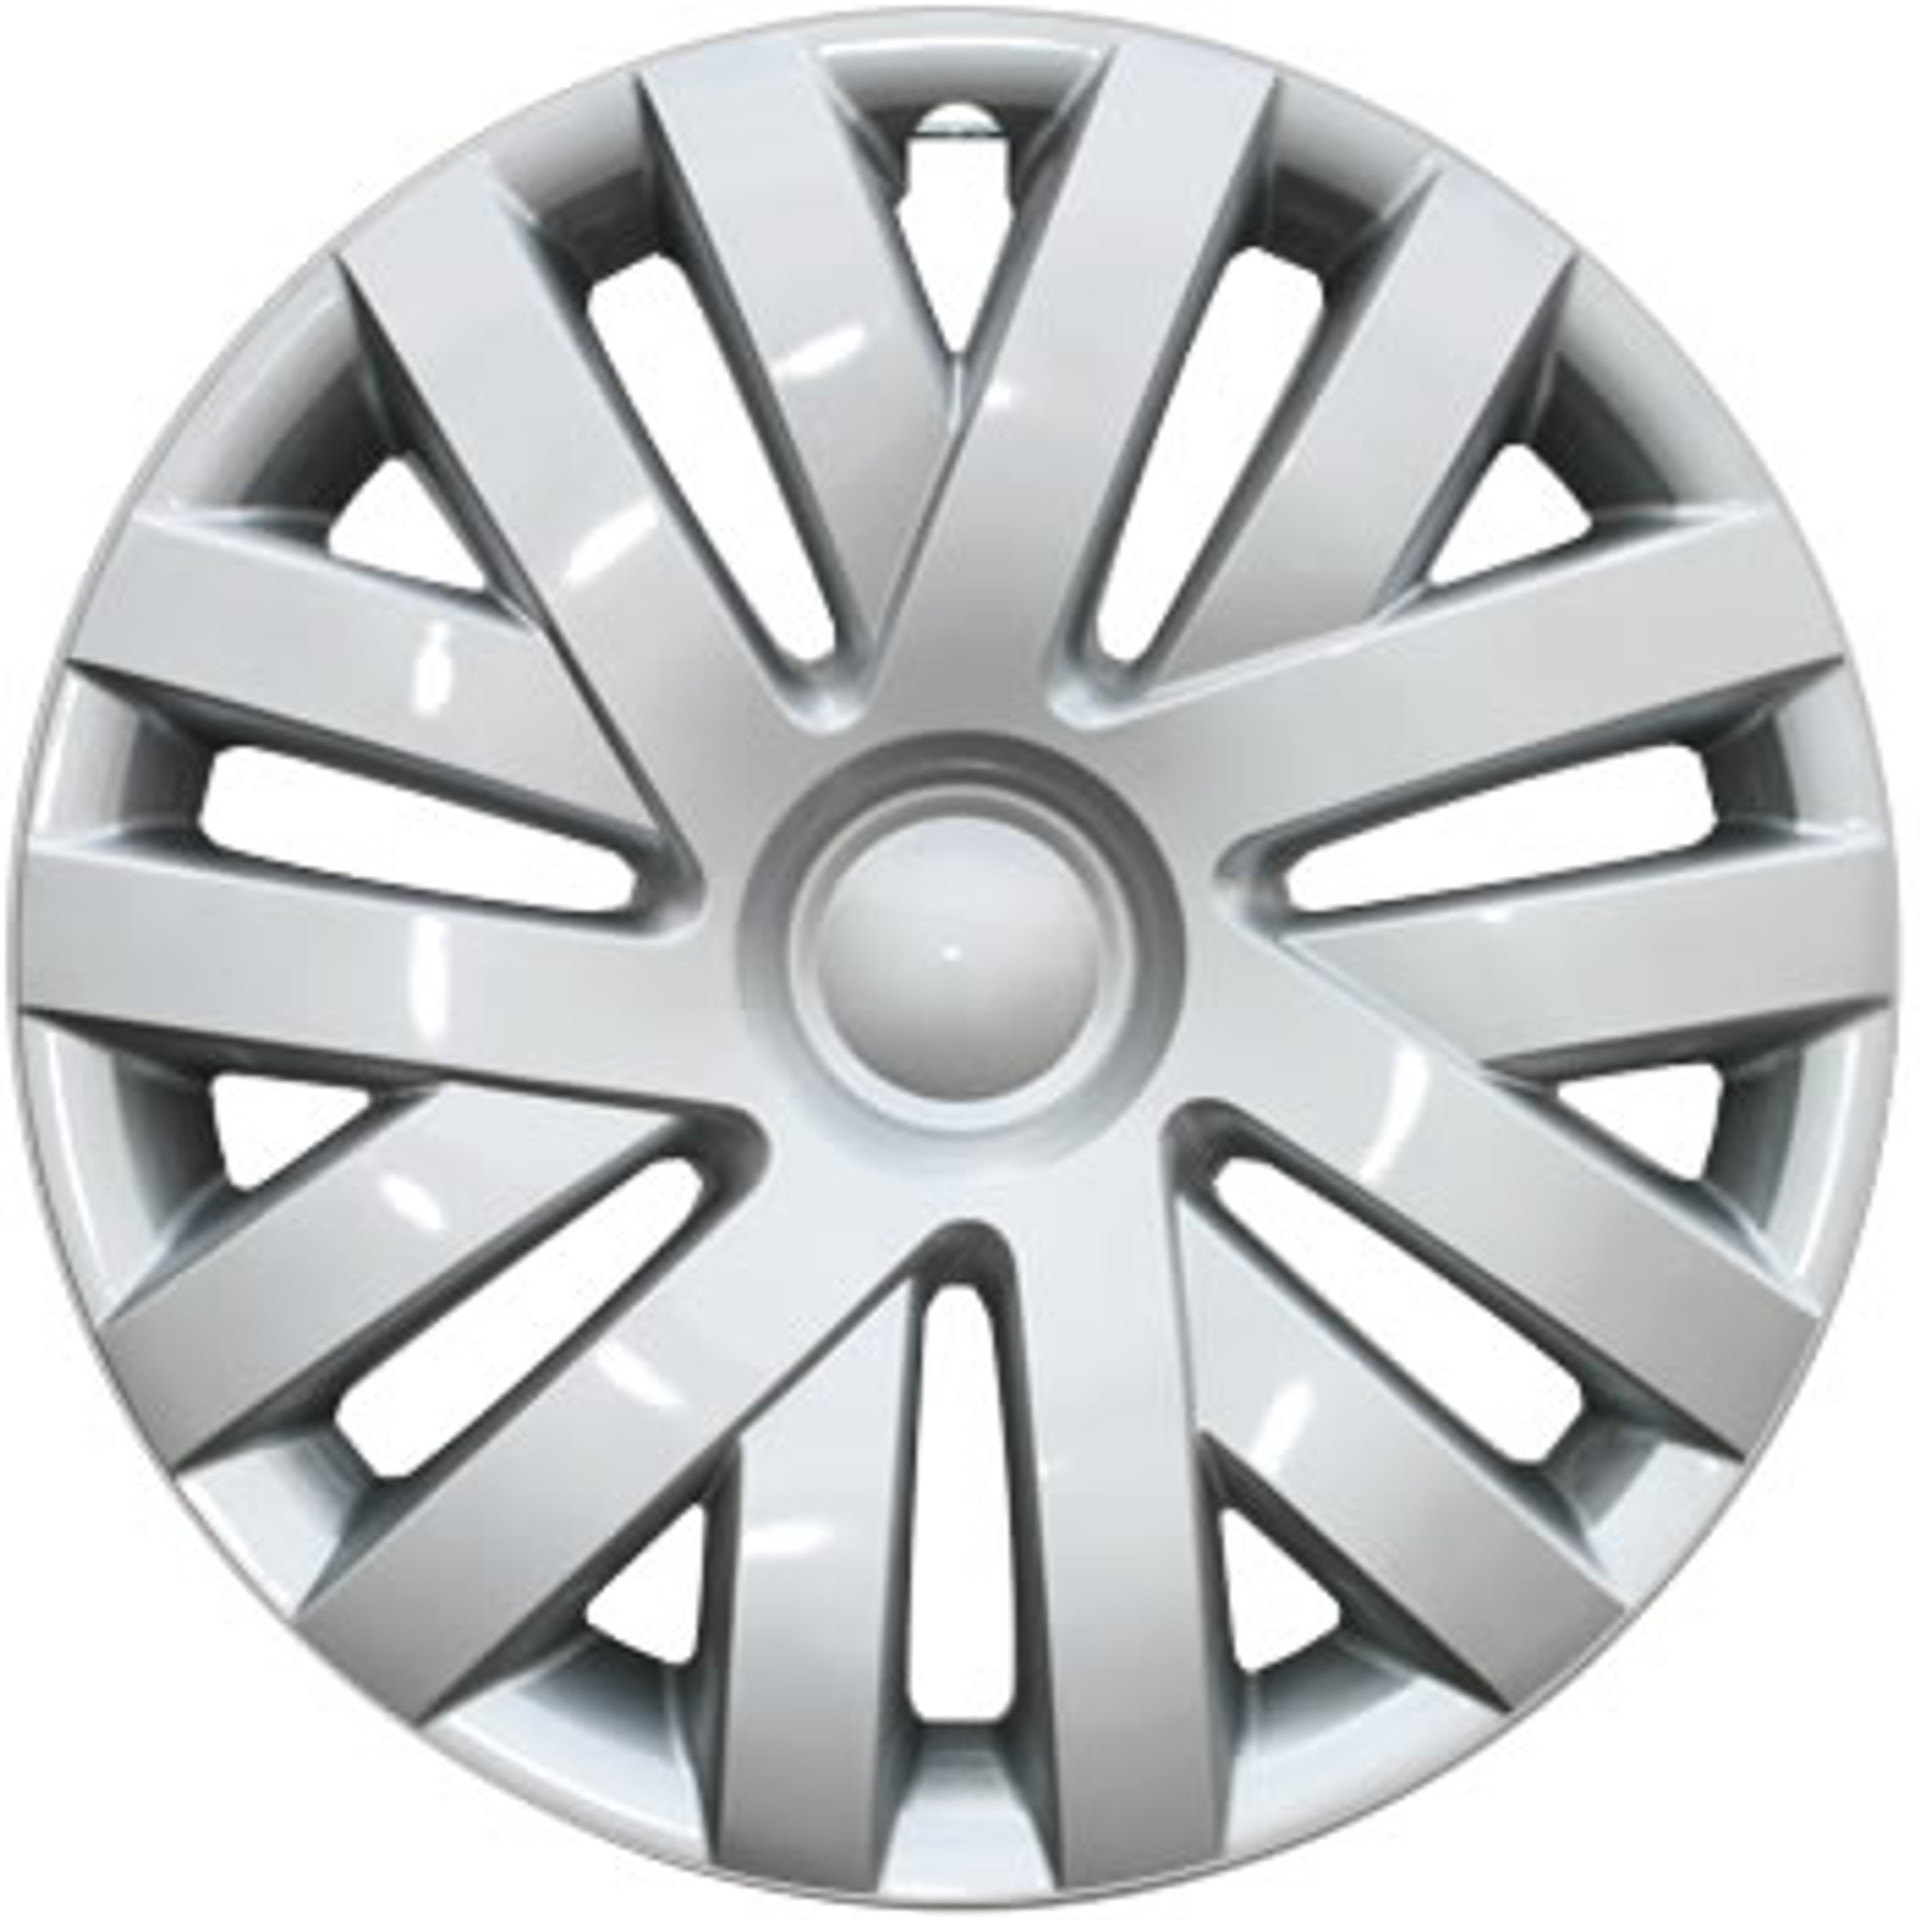 jetta hubcaps